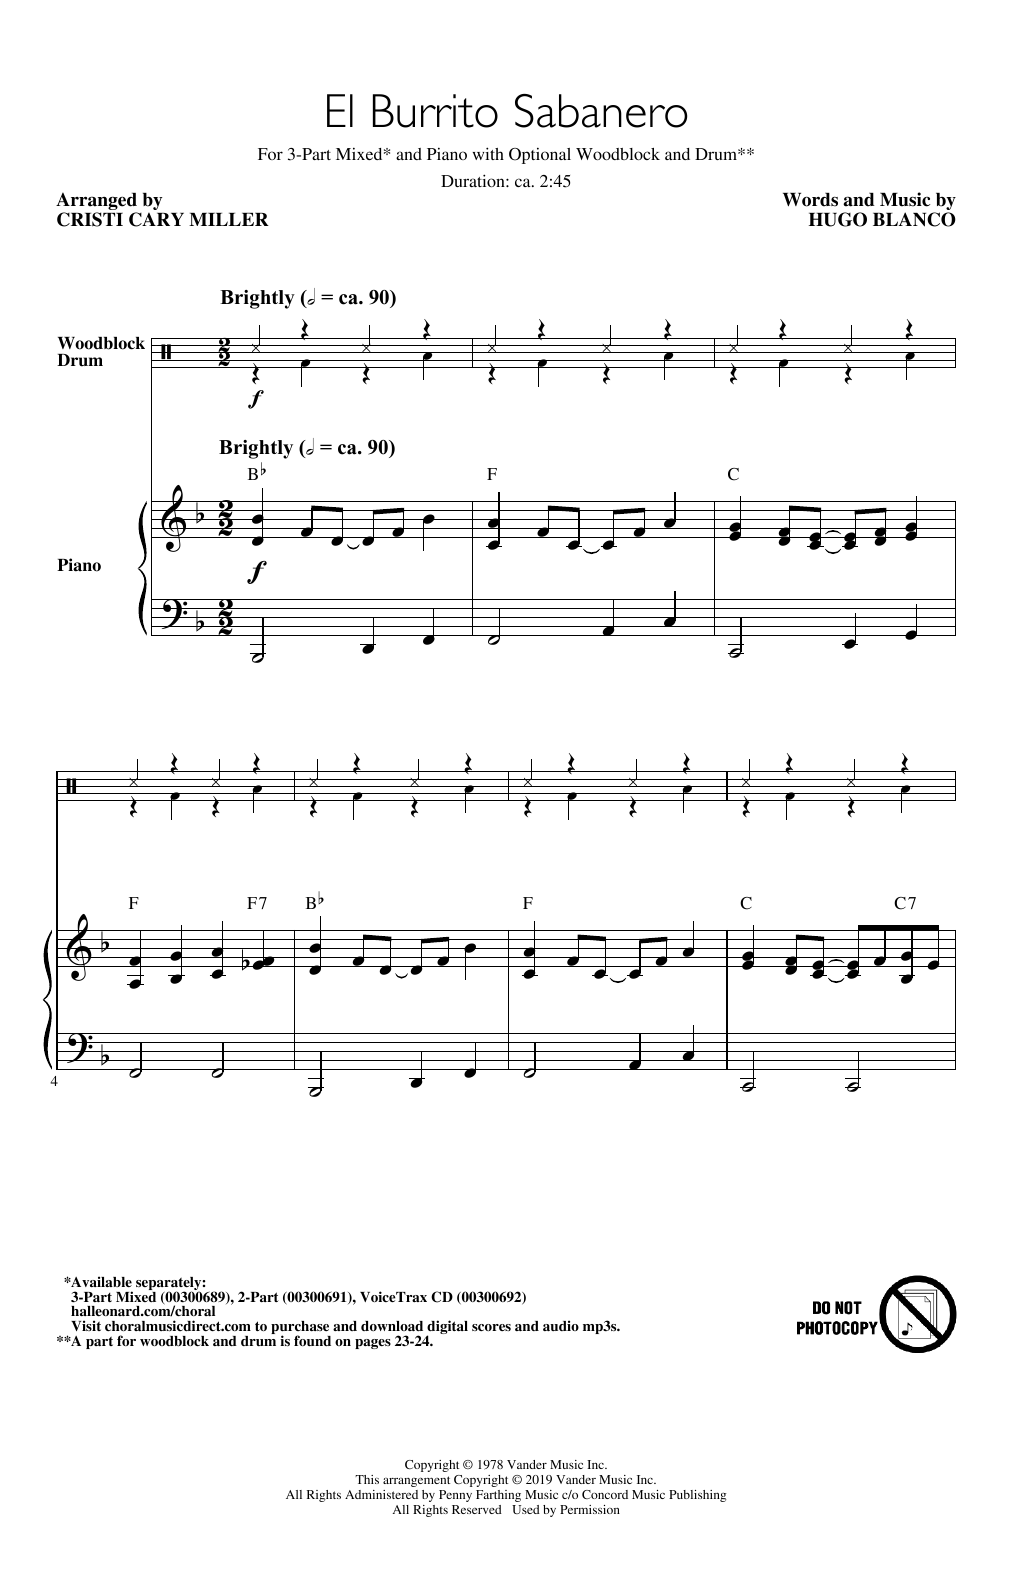 Hugo Blanco El Burrito Sabanero (Mi Burrito Sabanero) (arr. Cristi Cary Miller) Sheet Music Notes & Chords for 3-Part Mixed Choir - Download or Print PDF